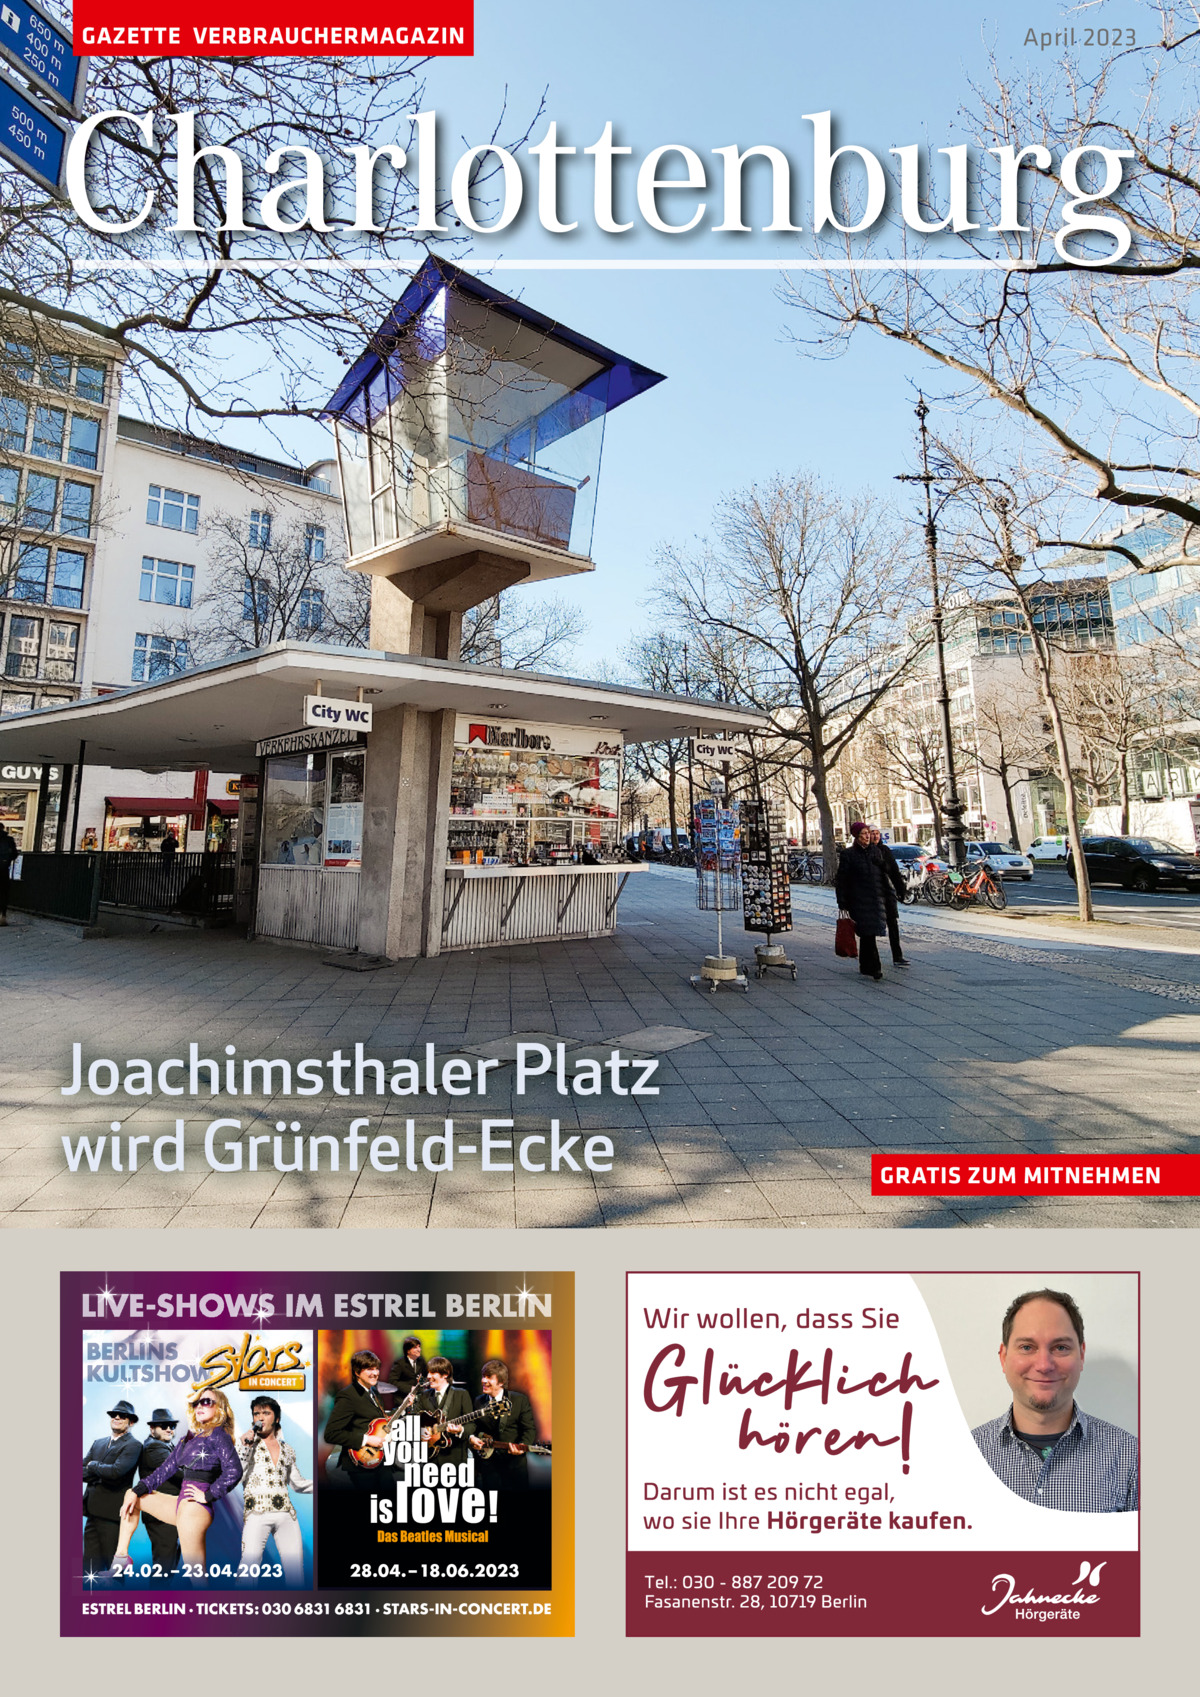 GAZETTE VERBRAUCHERMAGAZIN  April 2023  Charlottenburg  Joachimsthaler Platz wird Grünfeld-Ecke  GRATIS ZUM MITNEHMEN